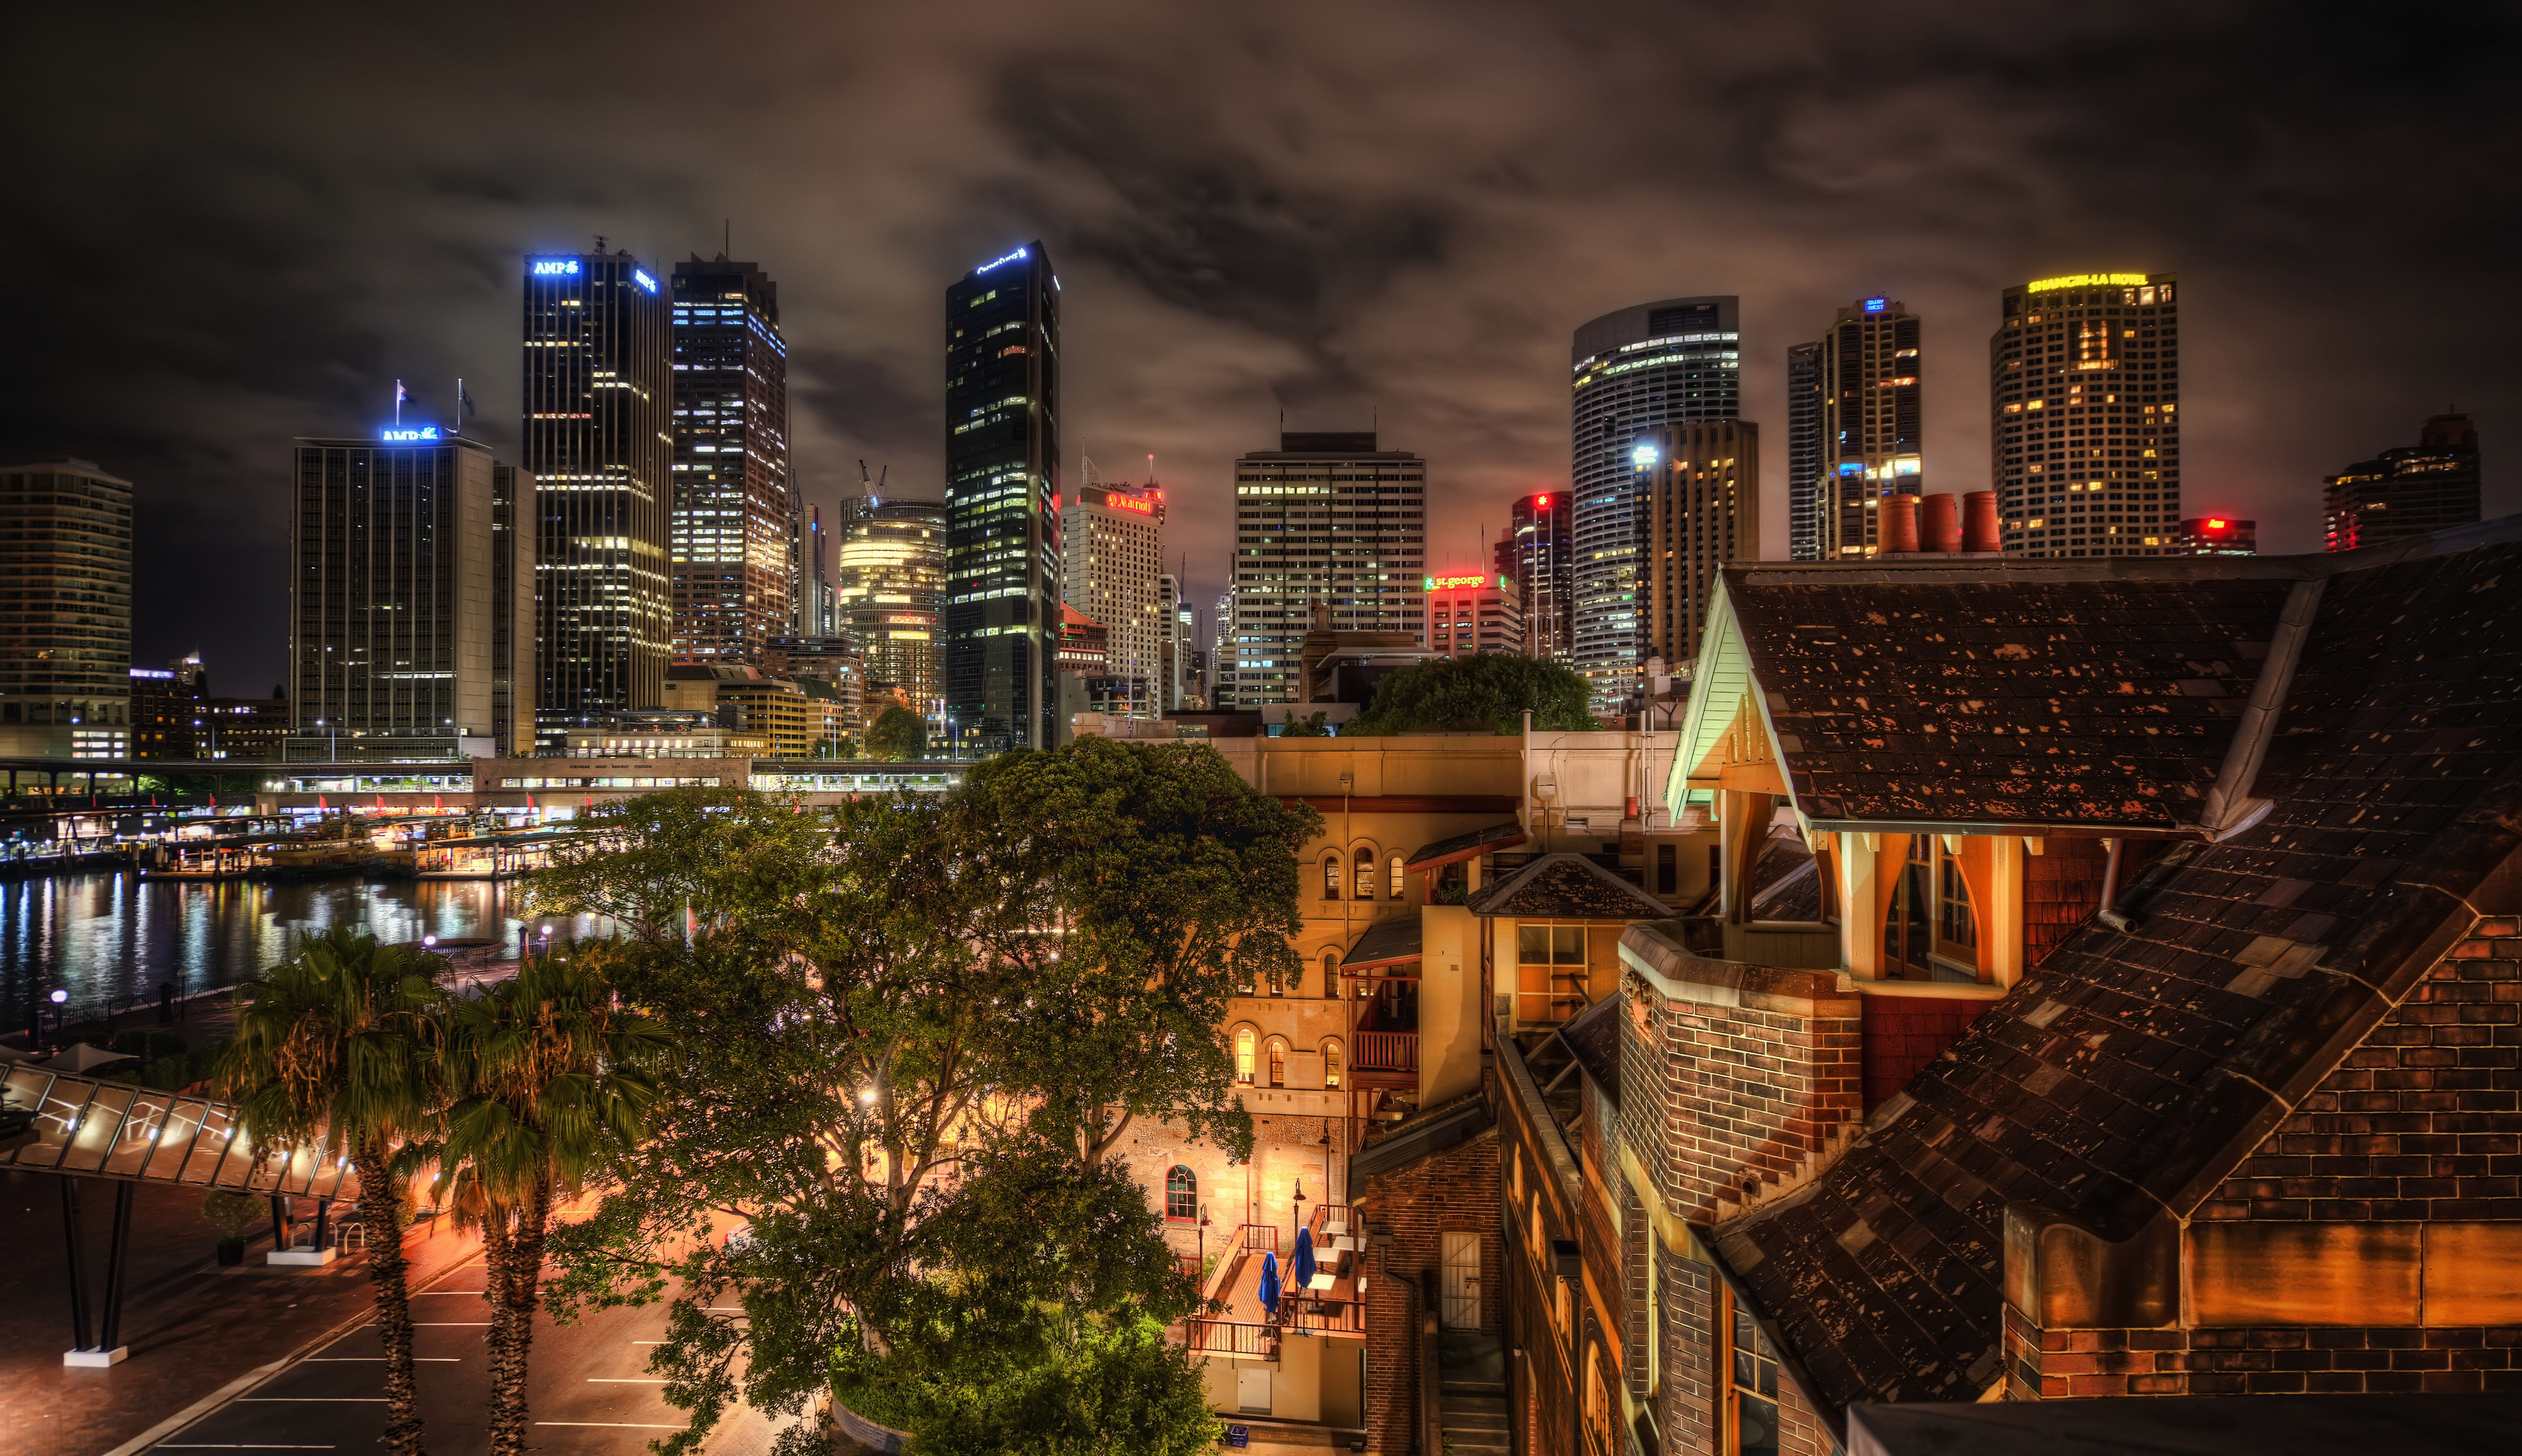 Sydney 4k Ultra HD Wallpaper by Trey Ratcliff